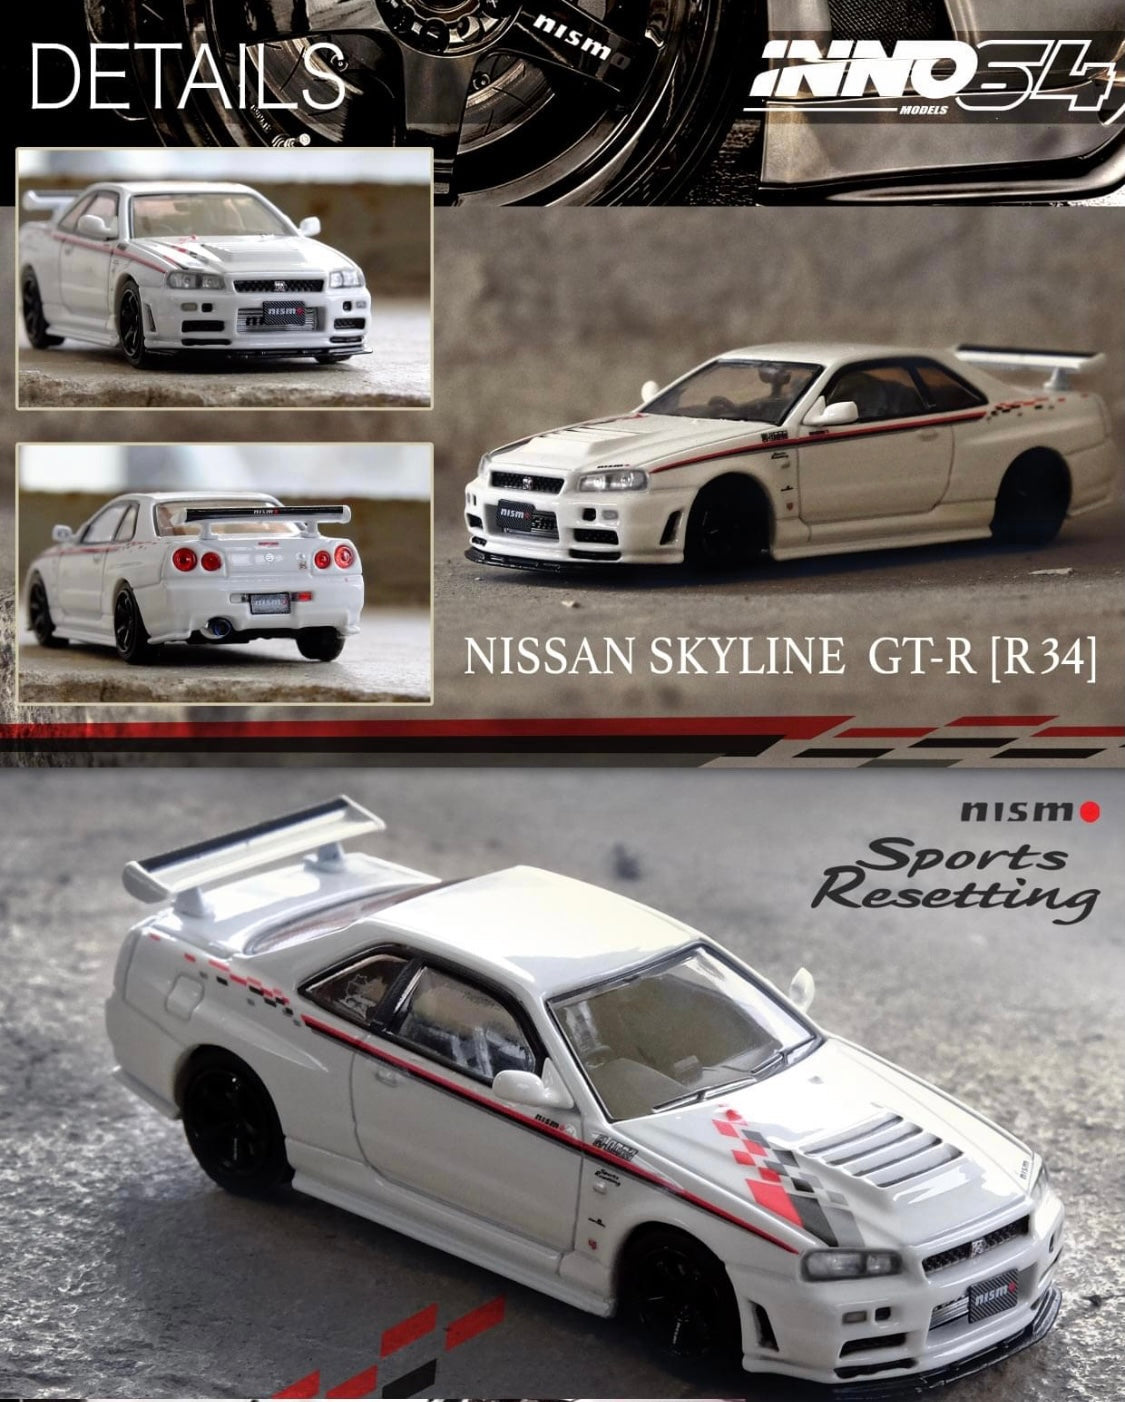 Inno64 1:64 Nissan Skyline GT-R R34 Nismo Sports Resetting